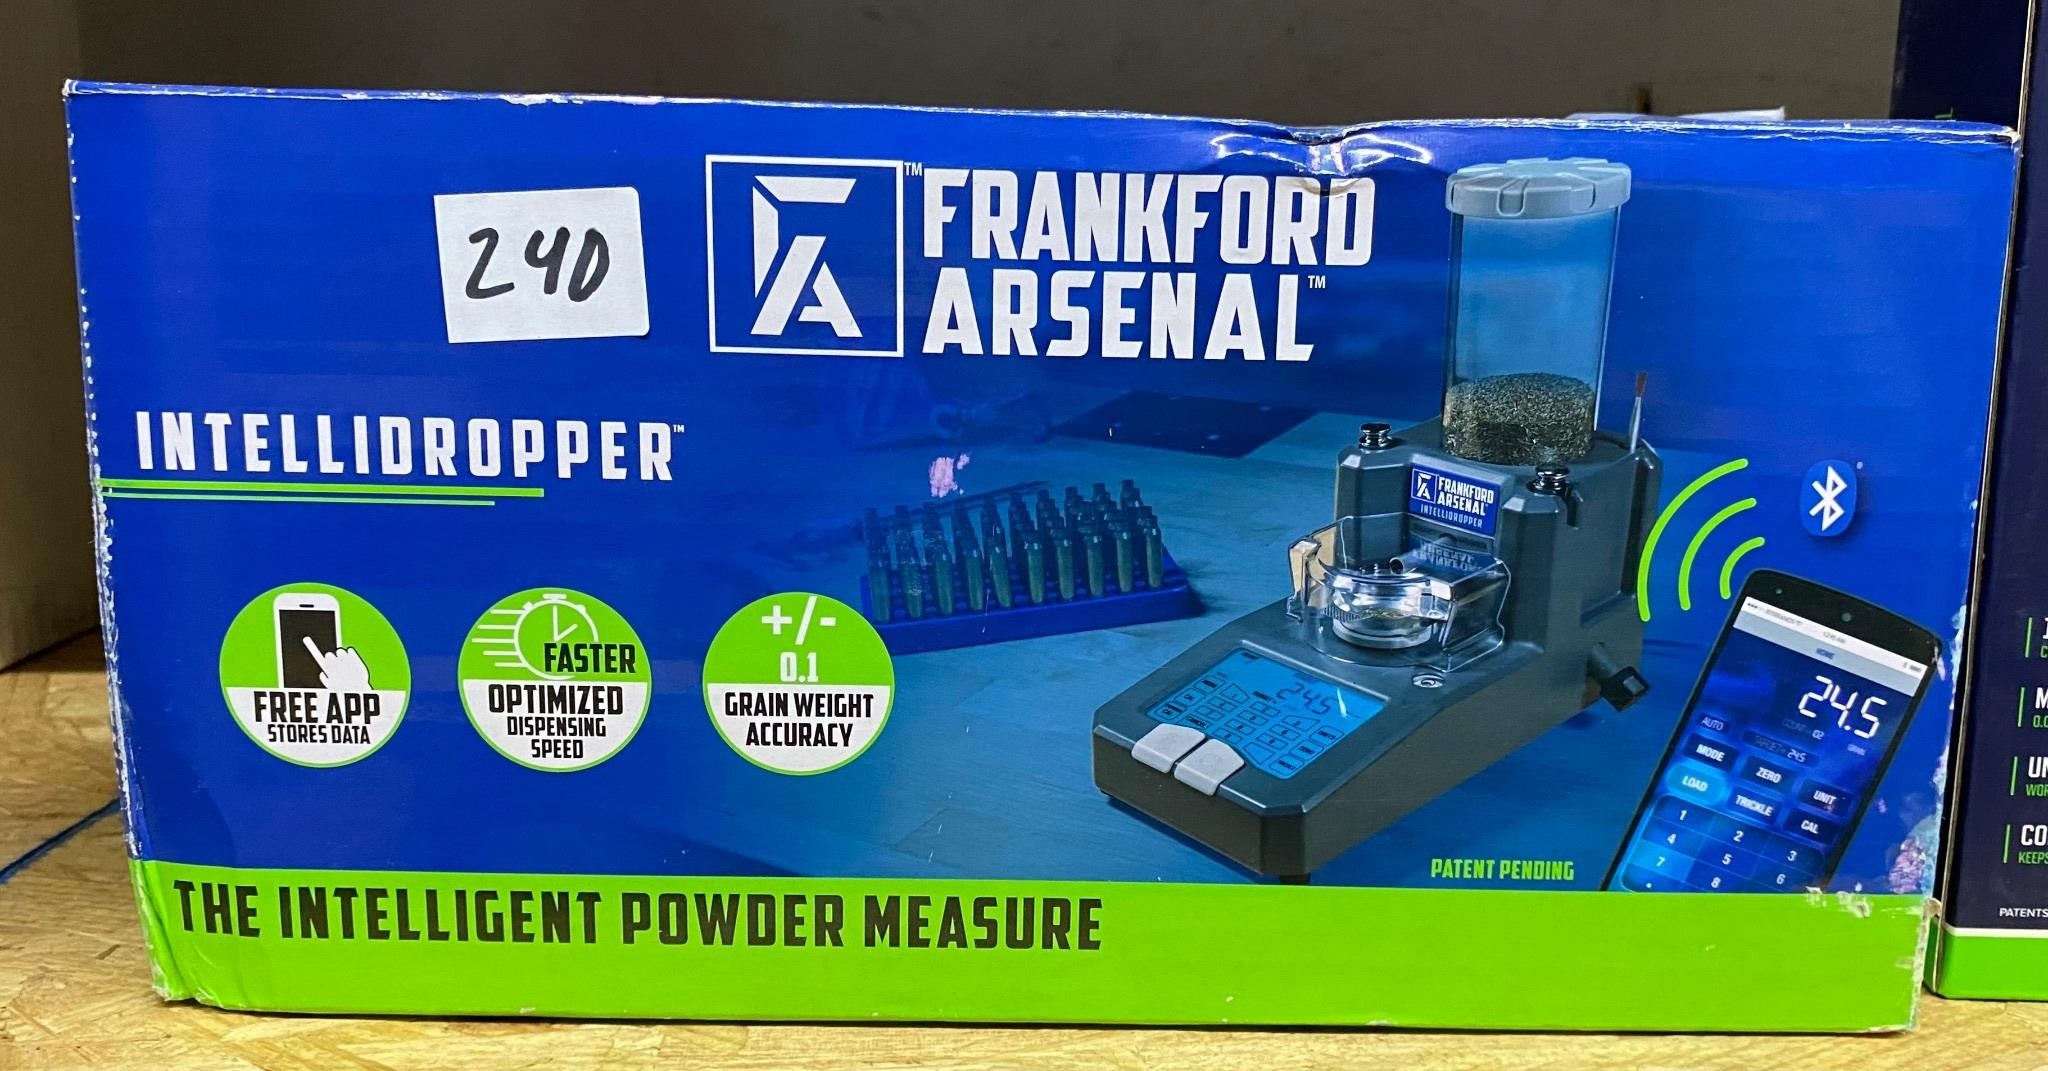 Frankford Intellidropper, Powder Measure